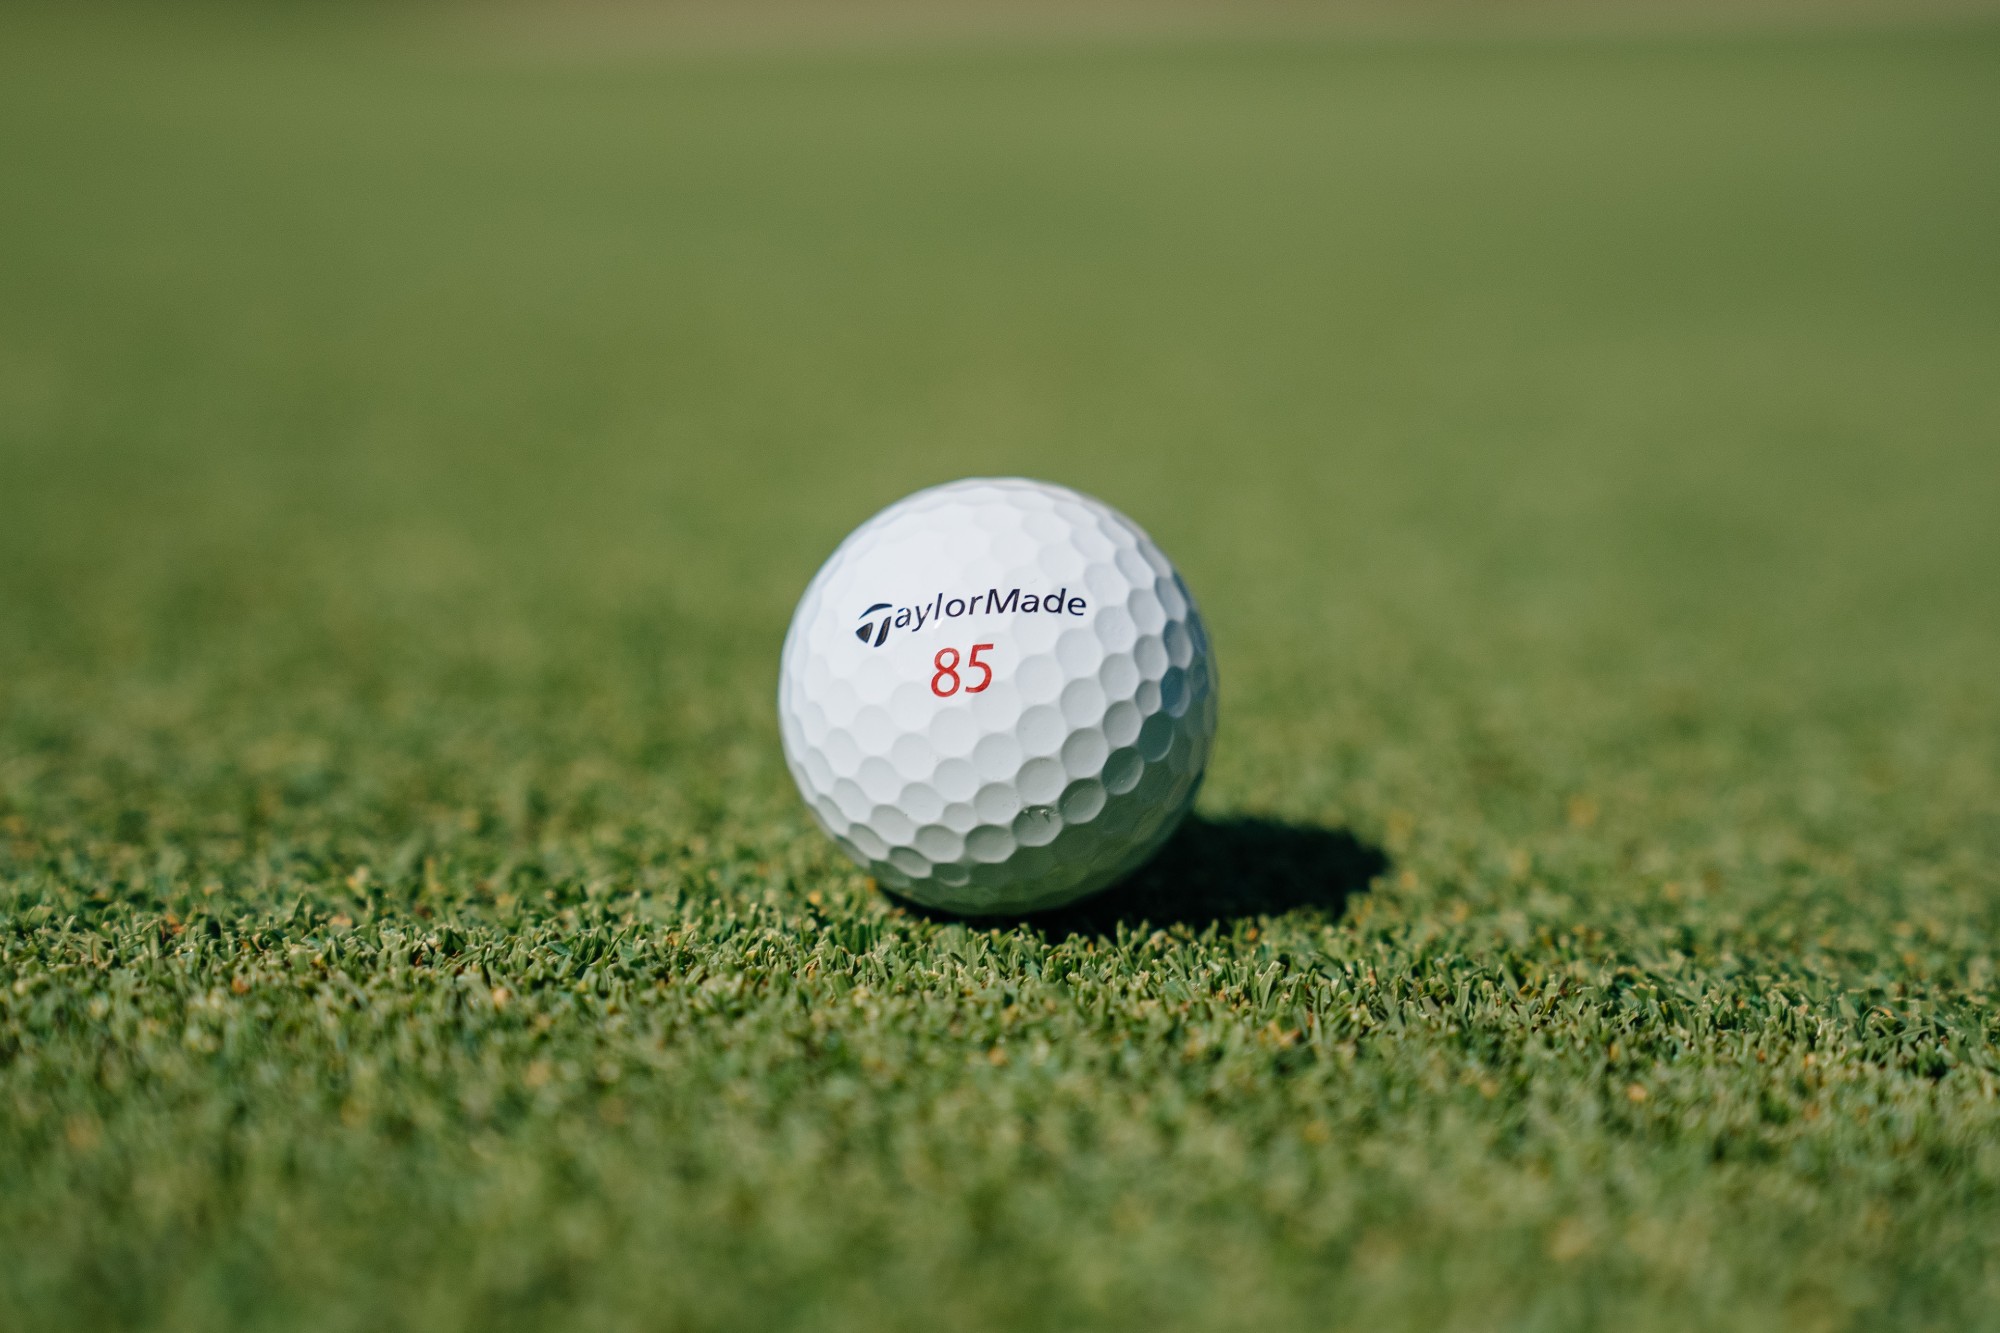 Sergio Garcia's TaylorMade golf ball